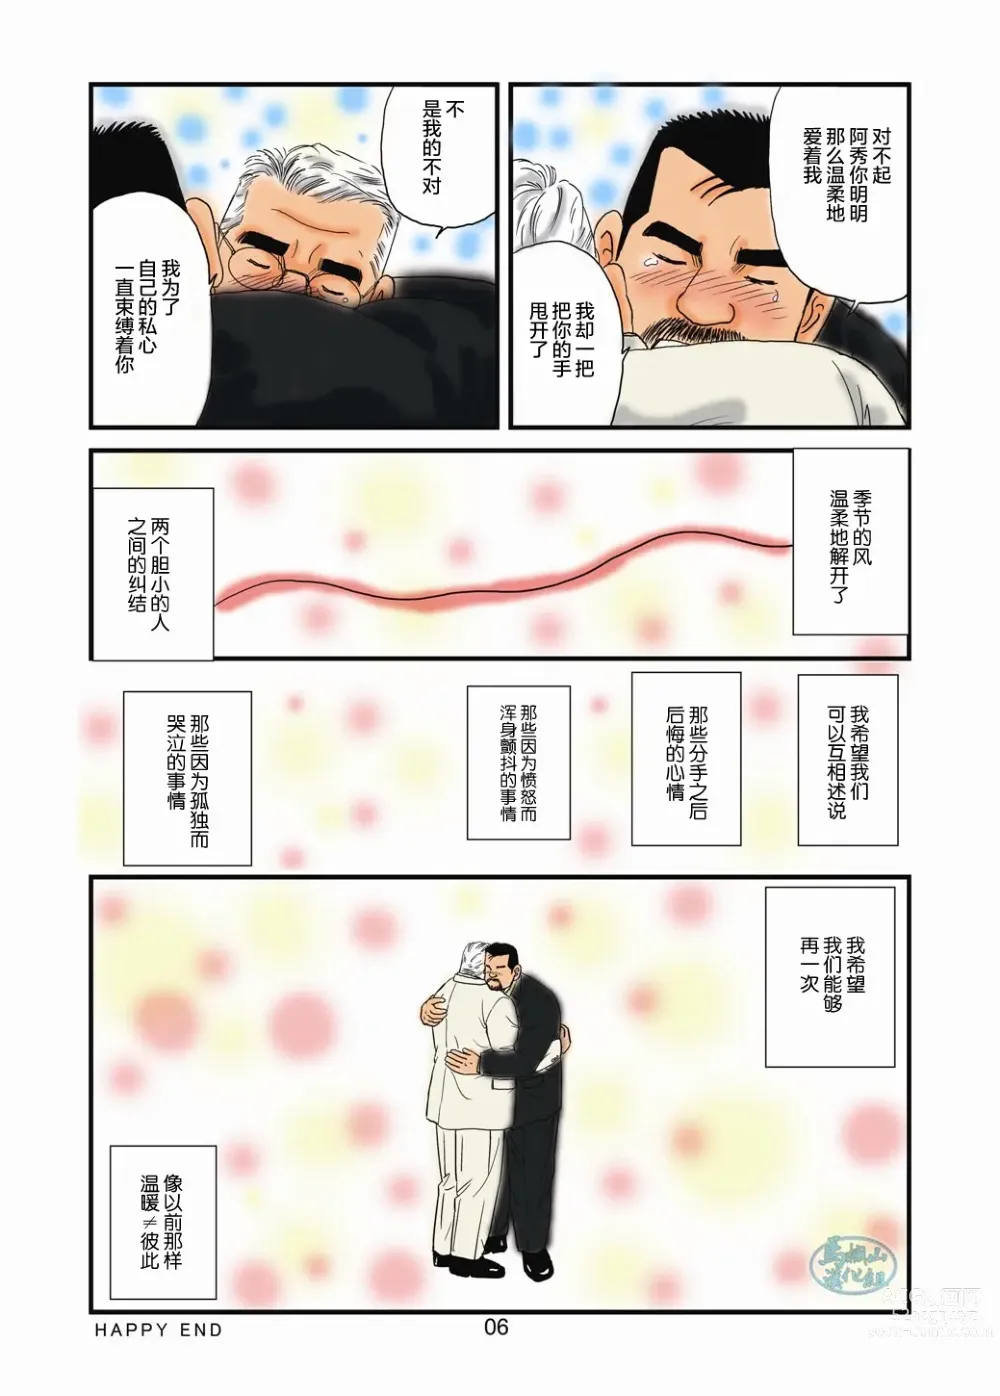 Page 28 of manga 「铁道员的浪漫」第一回 深夜的站长室